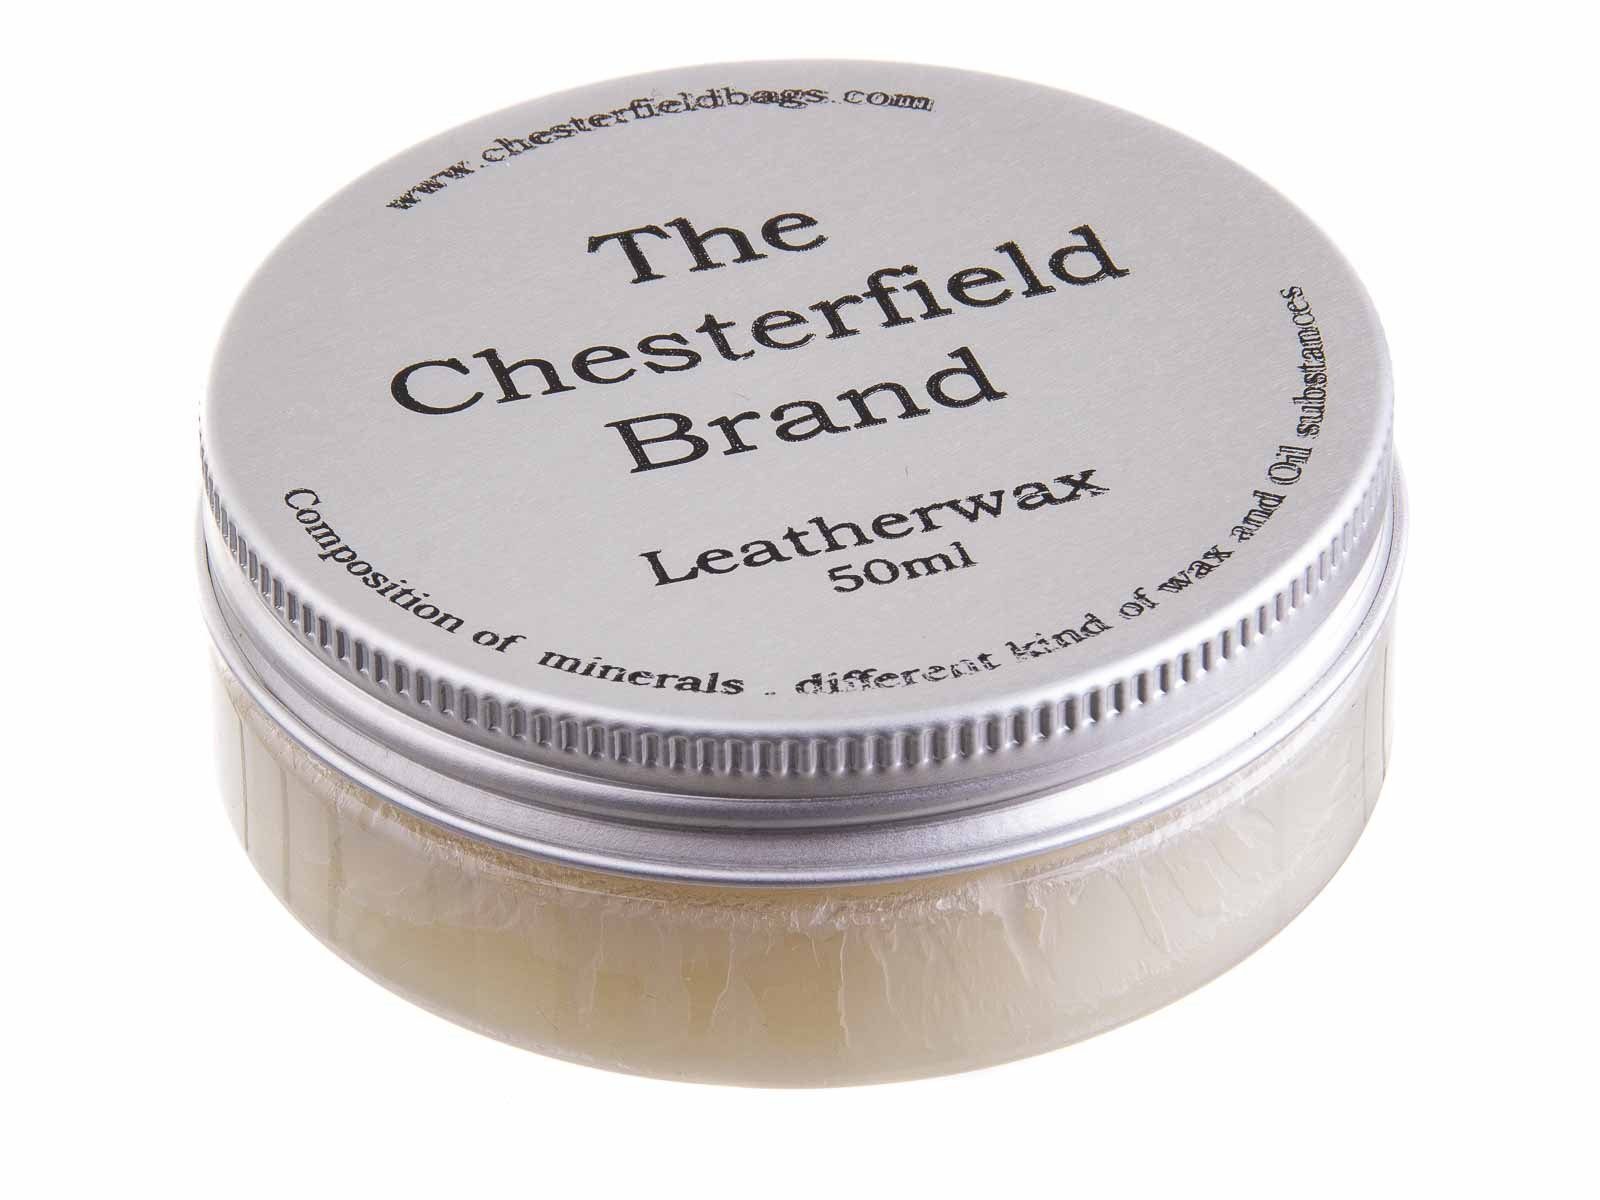 Echtleder The Chesterfield Chesterfield 50 C011001 St), Brand (1 ml The Brand Leatherwax Wanddekoobjekt